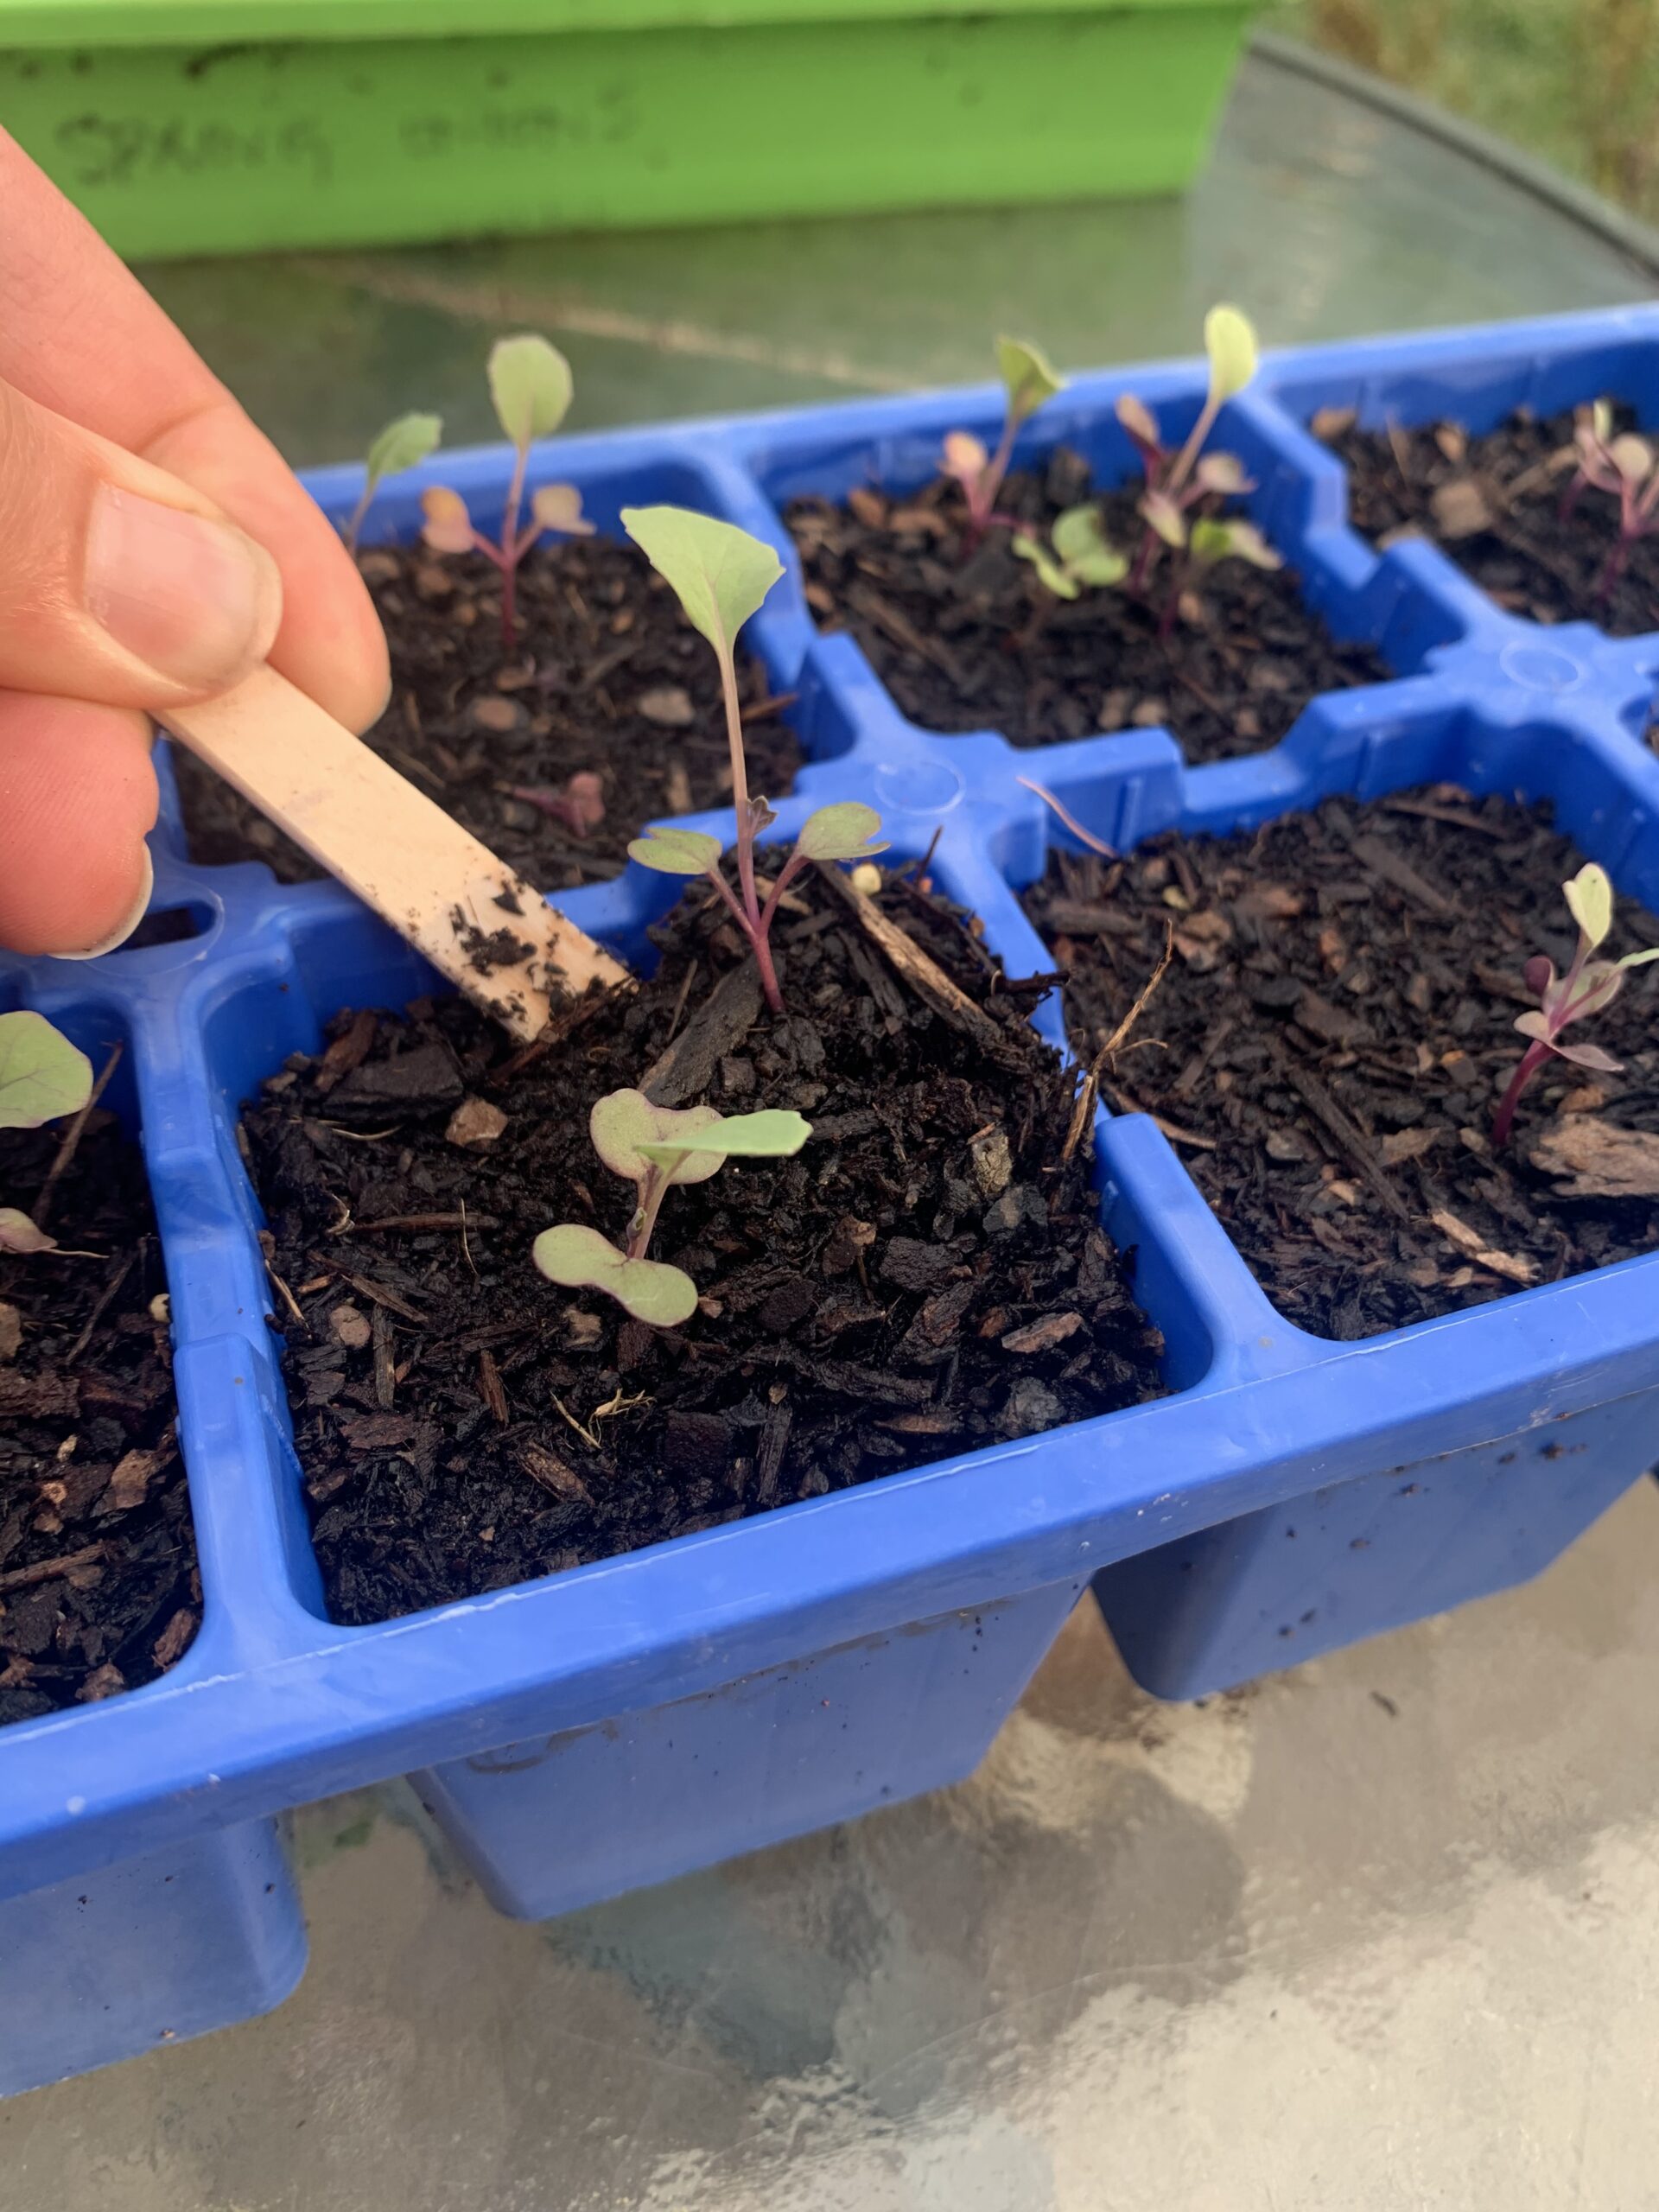 Growing veggies from seed